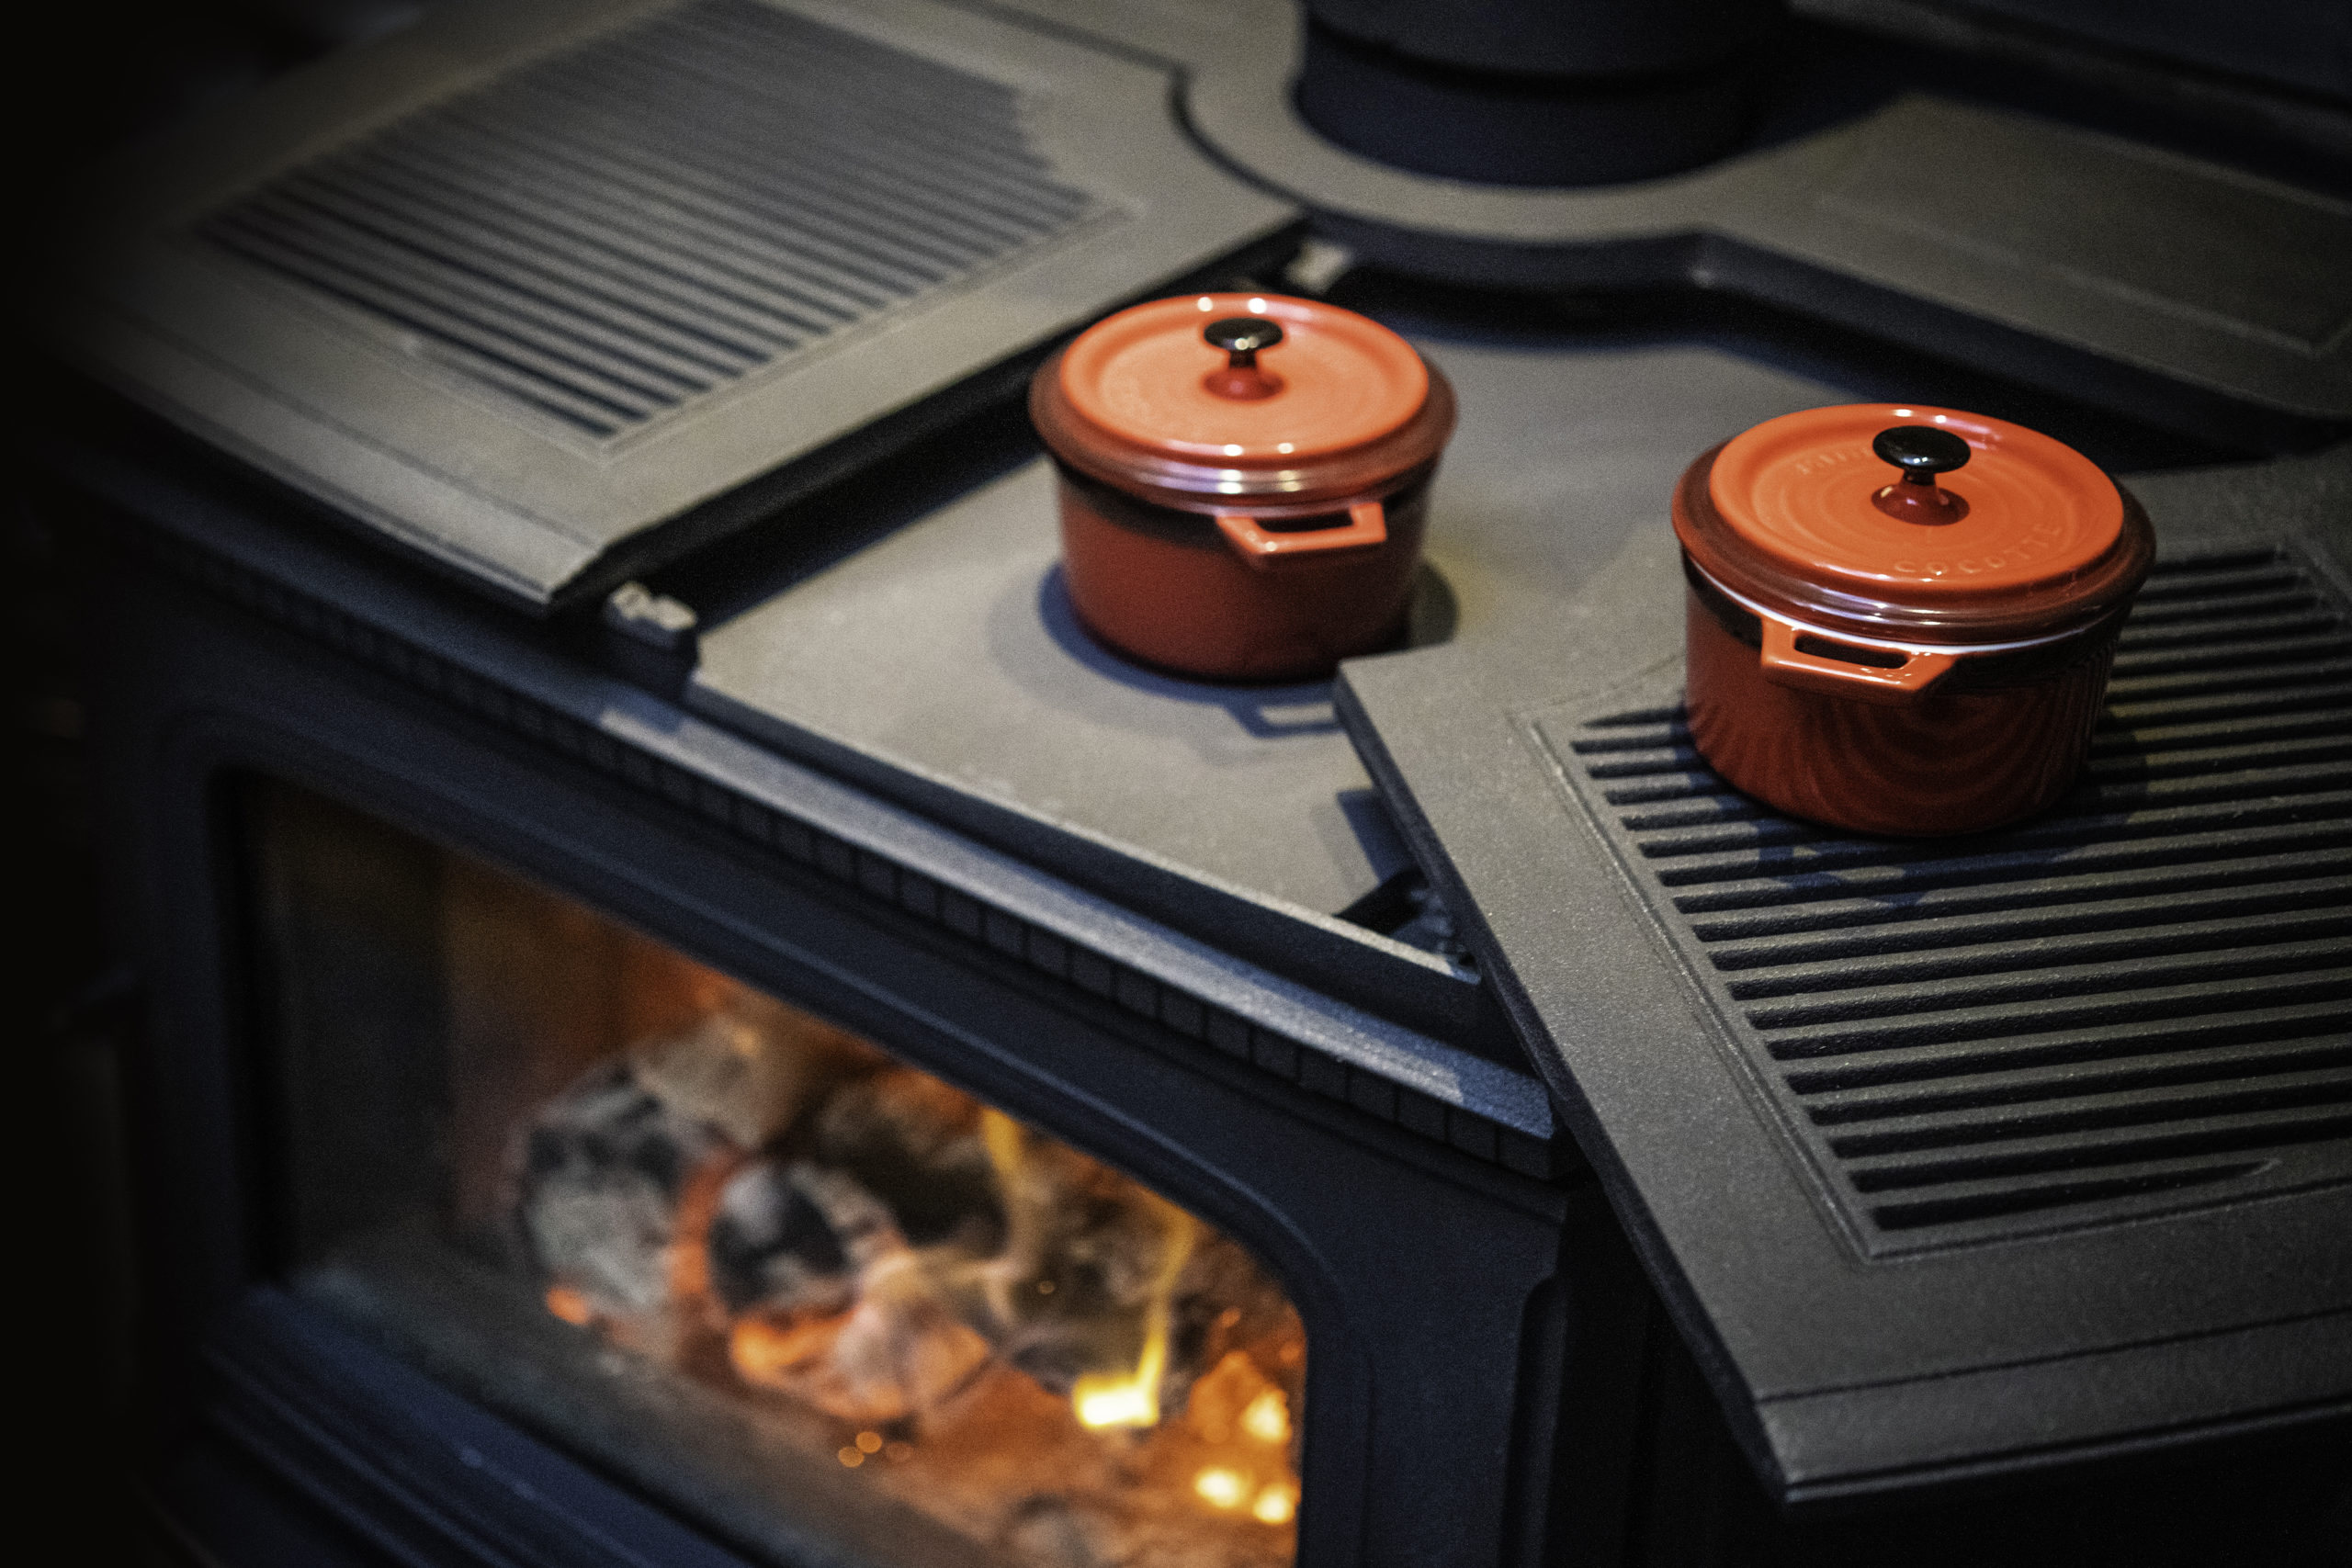 Alderlea T6 LE wood stove featuring Cast Iron over Steel technology